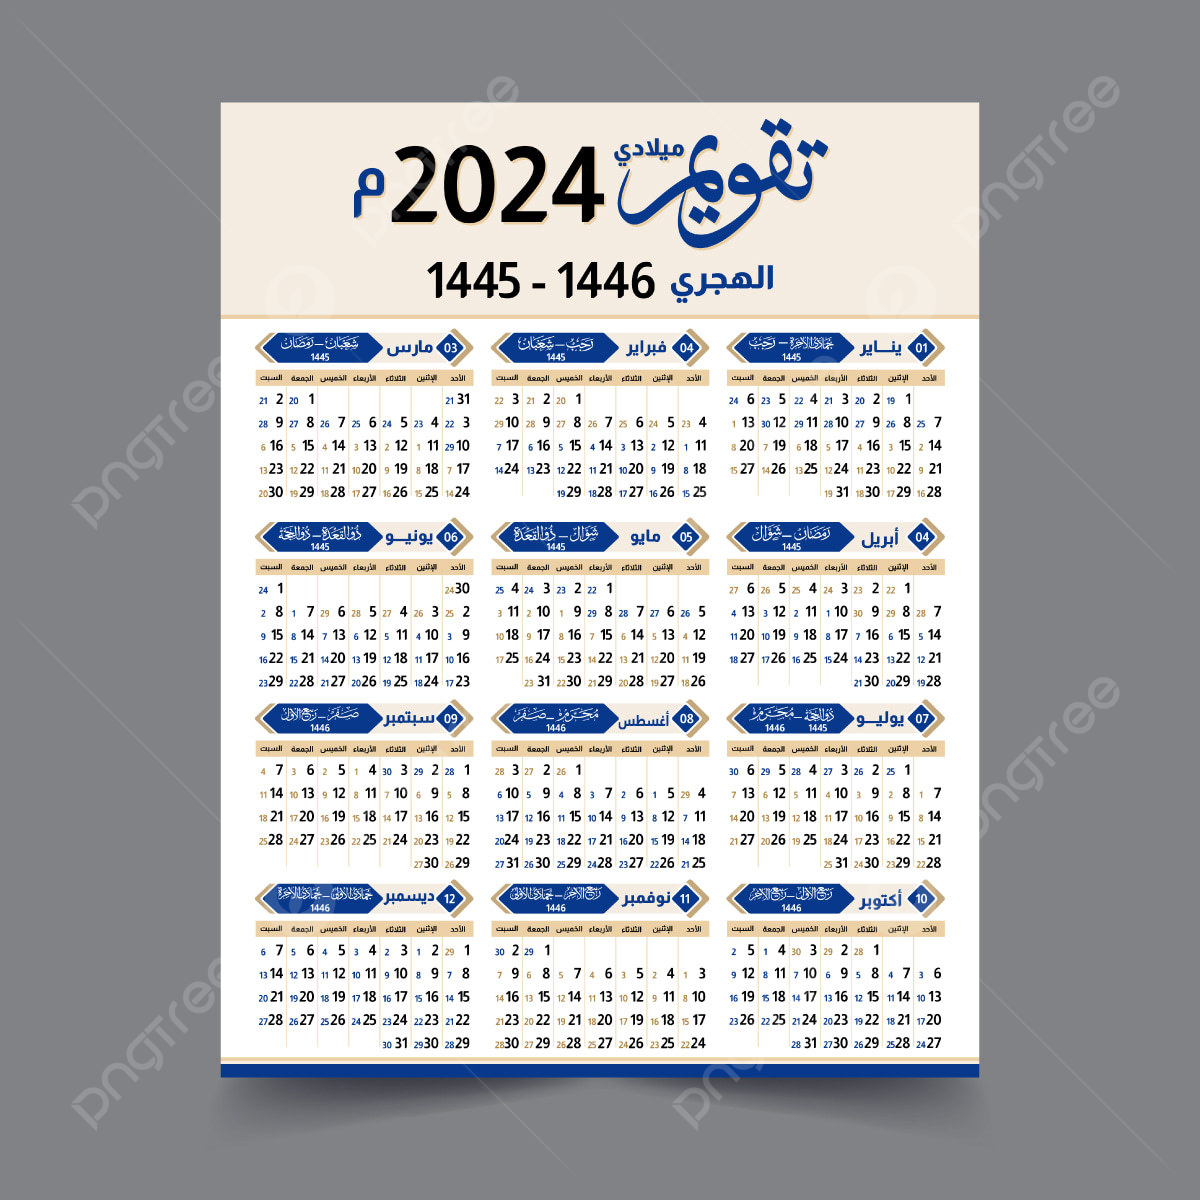 2024 Hijri Calendar Png Transparent Images Free Download | Vector in 29 July 2024 in Islamic Calendar